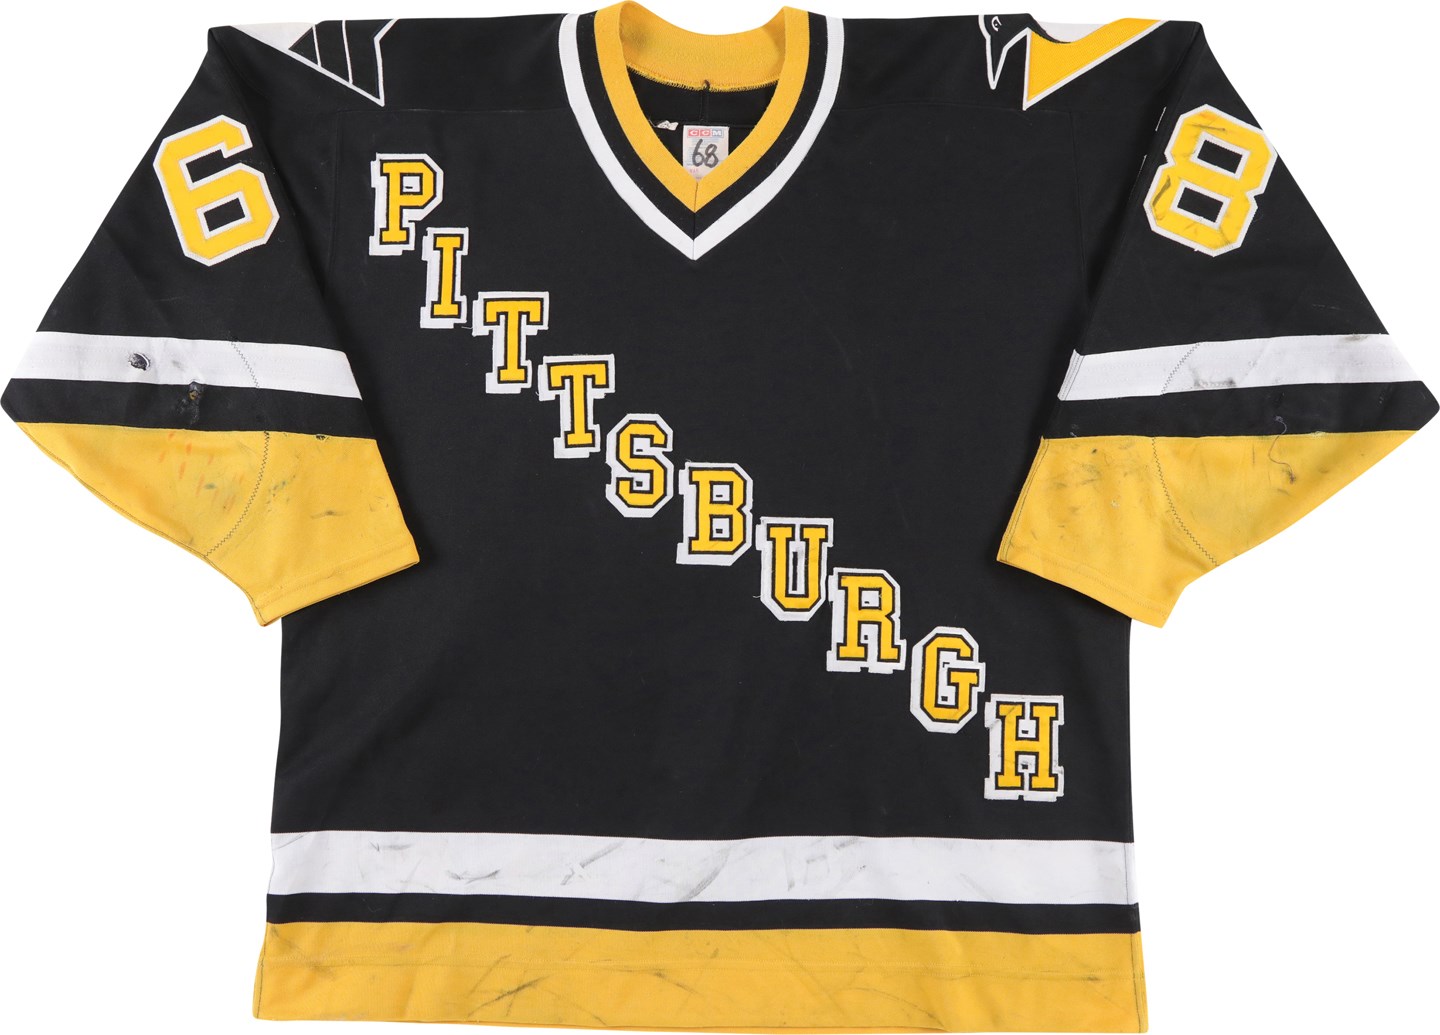 Hockey - 1994-95 Jaromir Jagr "Hammered" Pittsburgh Penguins Game Worn Jersey (Resolution Photo-Matched LOA)